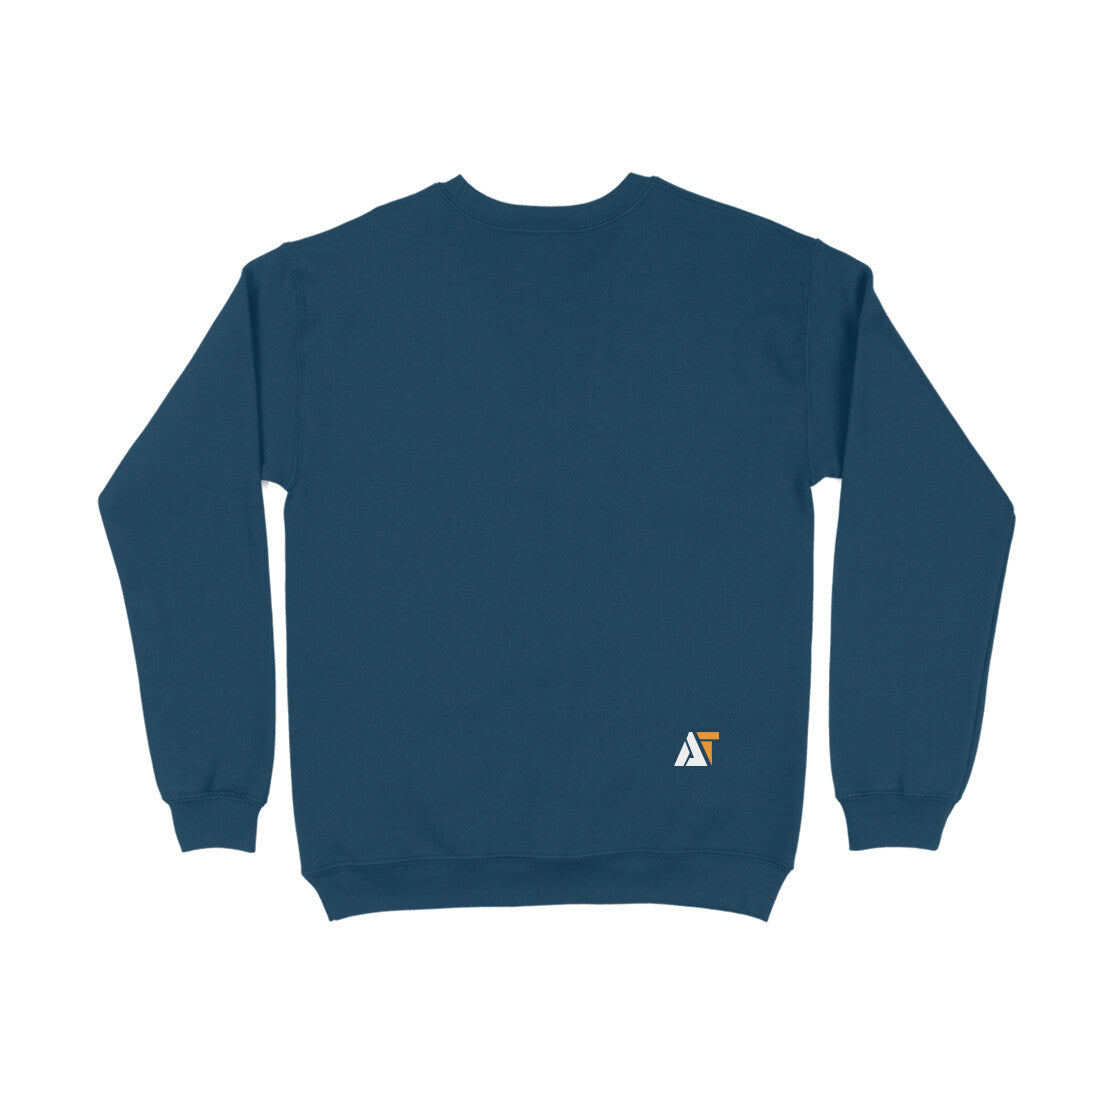 Rafale Skyline Cotton Sweatshirt-Navy Blue